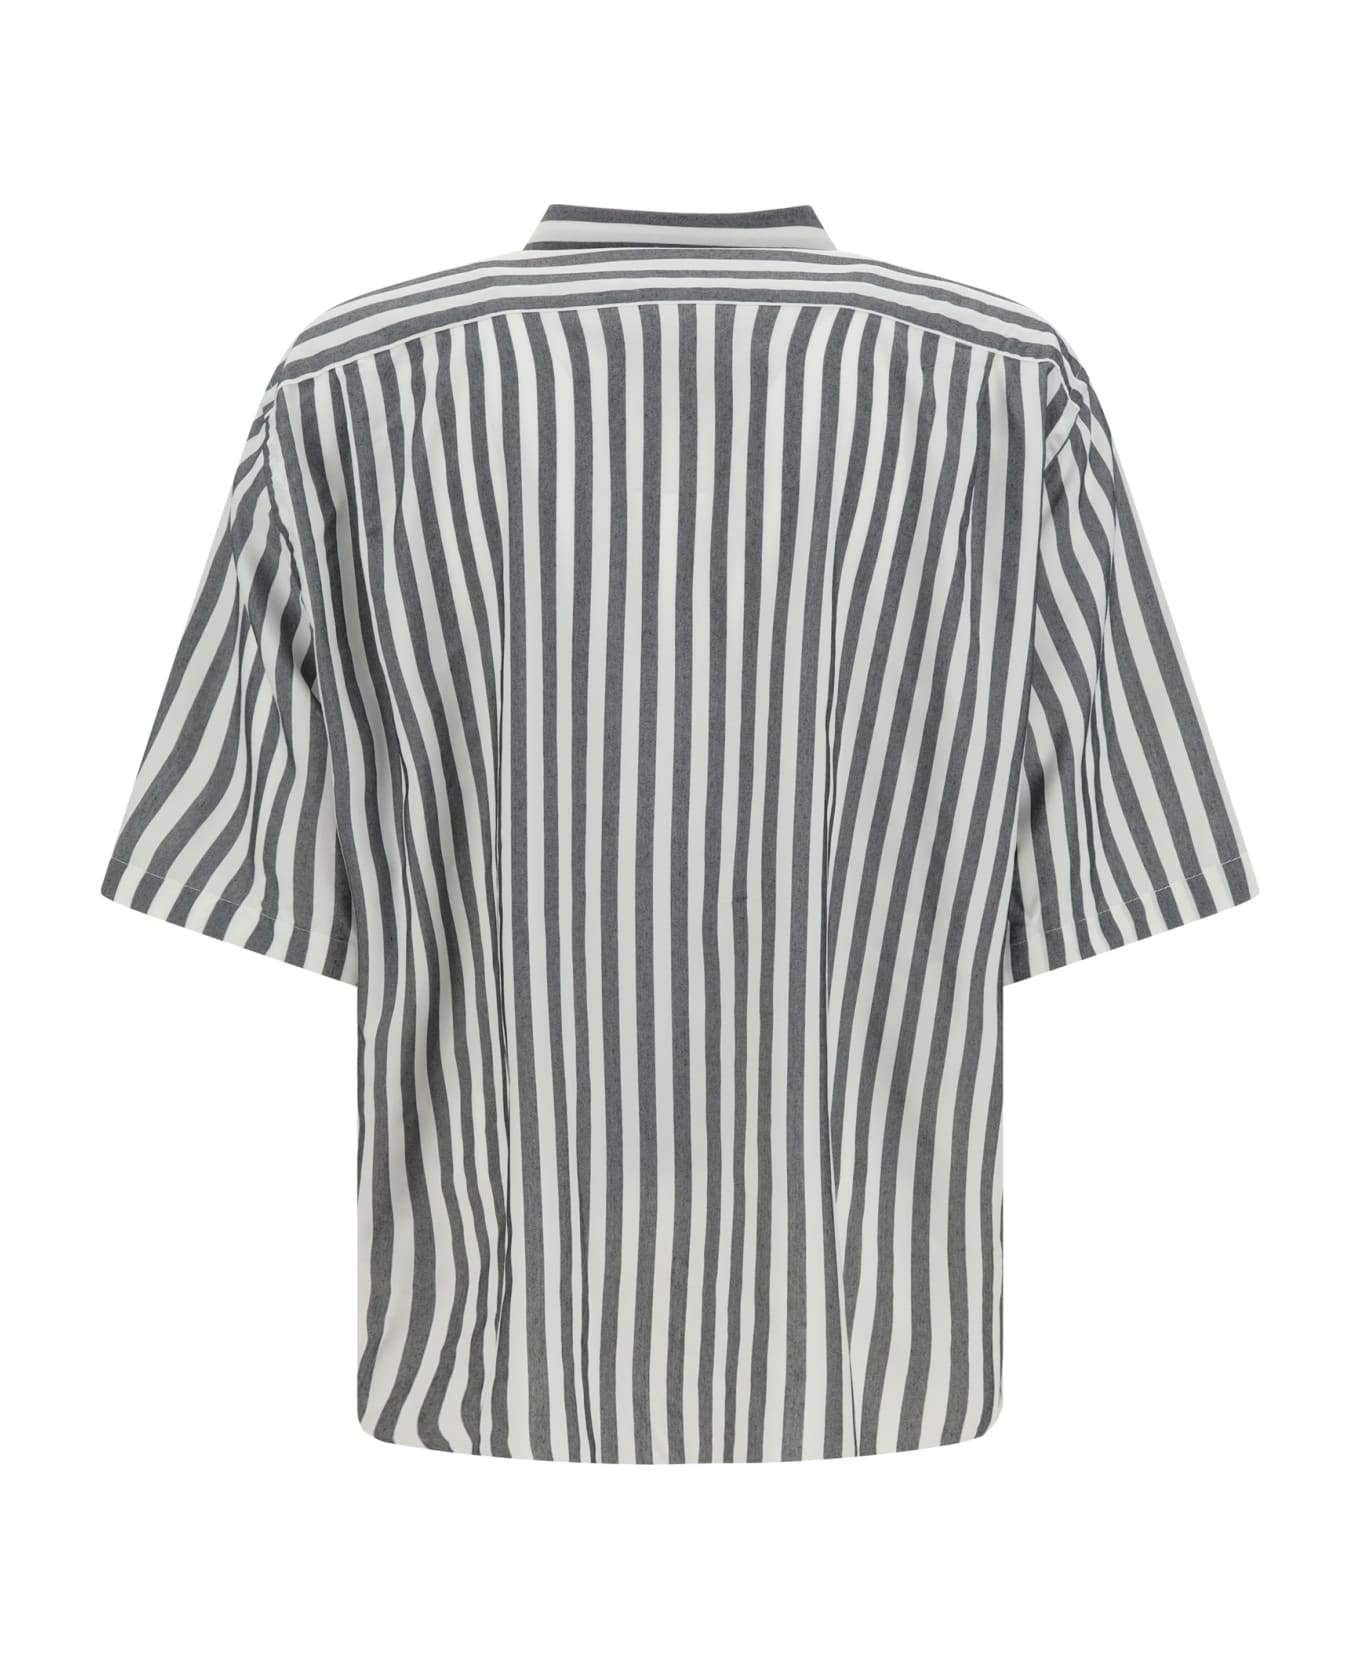 Acne Studios Shirt - Black/white シャツ